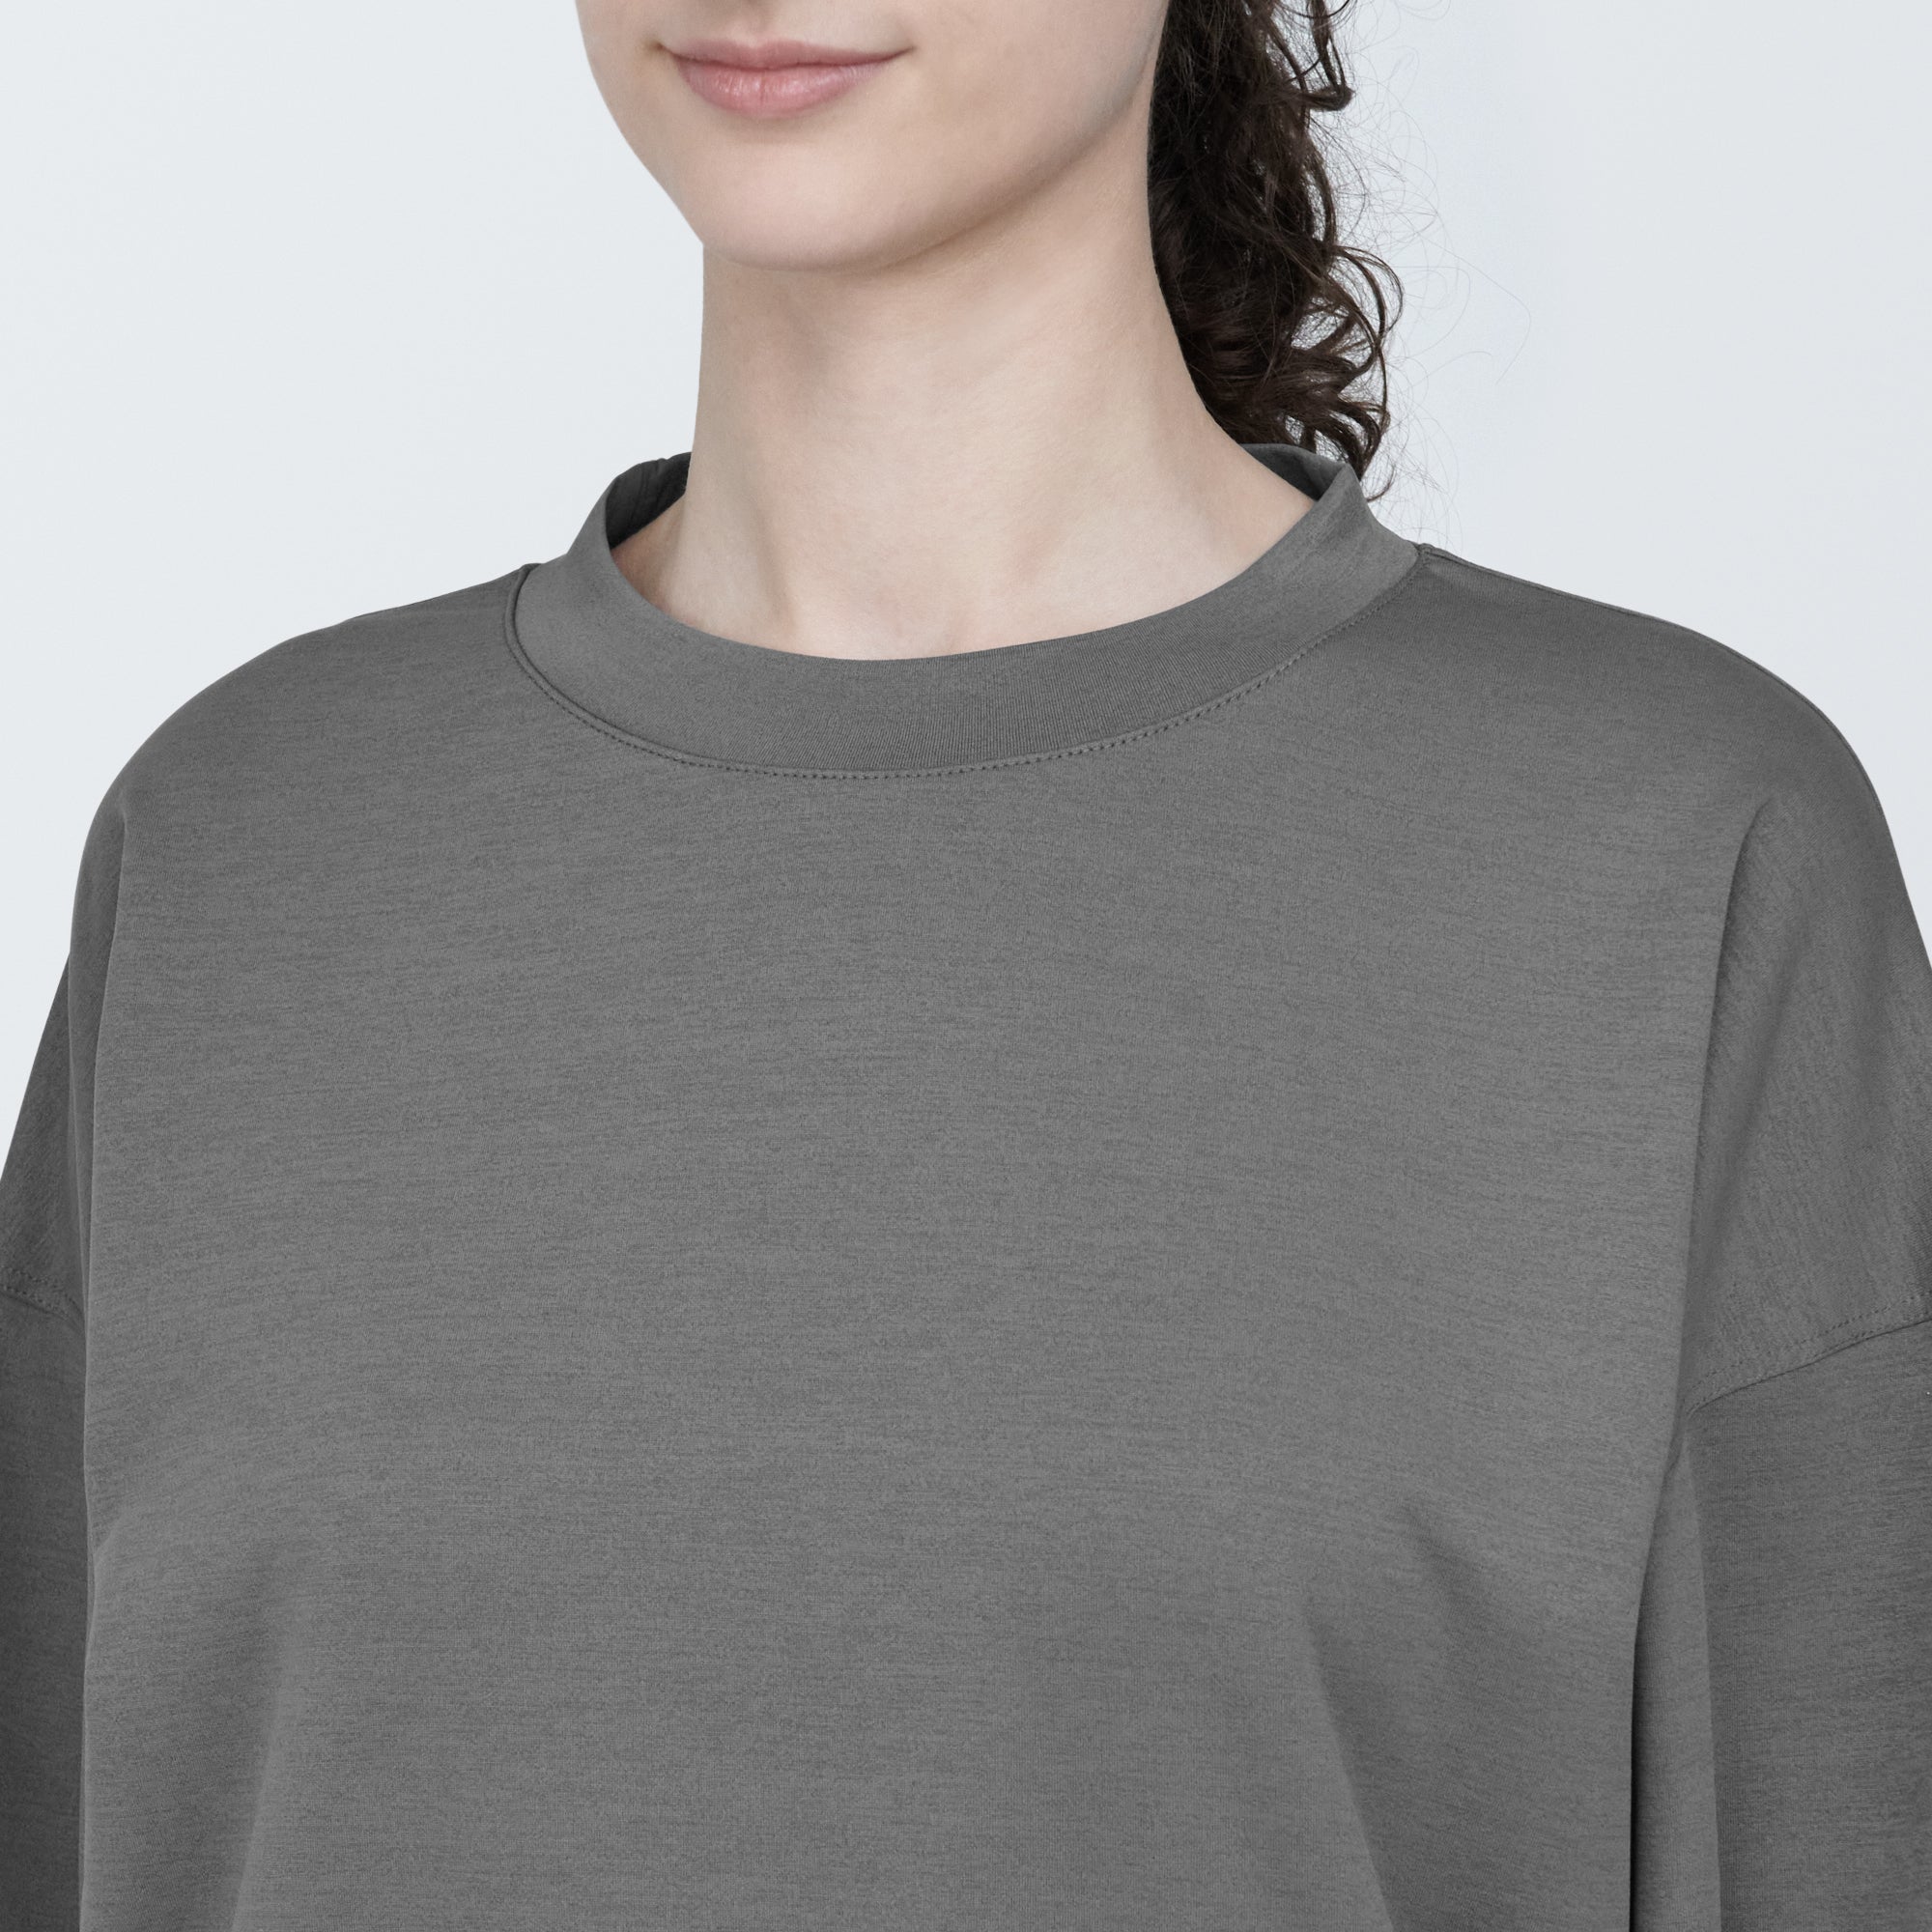 Women's UV Protection Quick Dry Sweatshirt